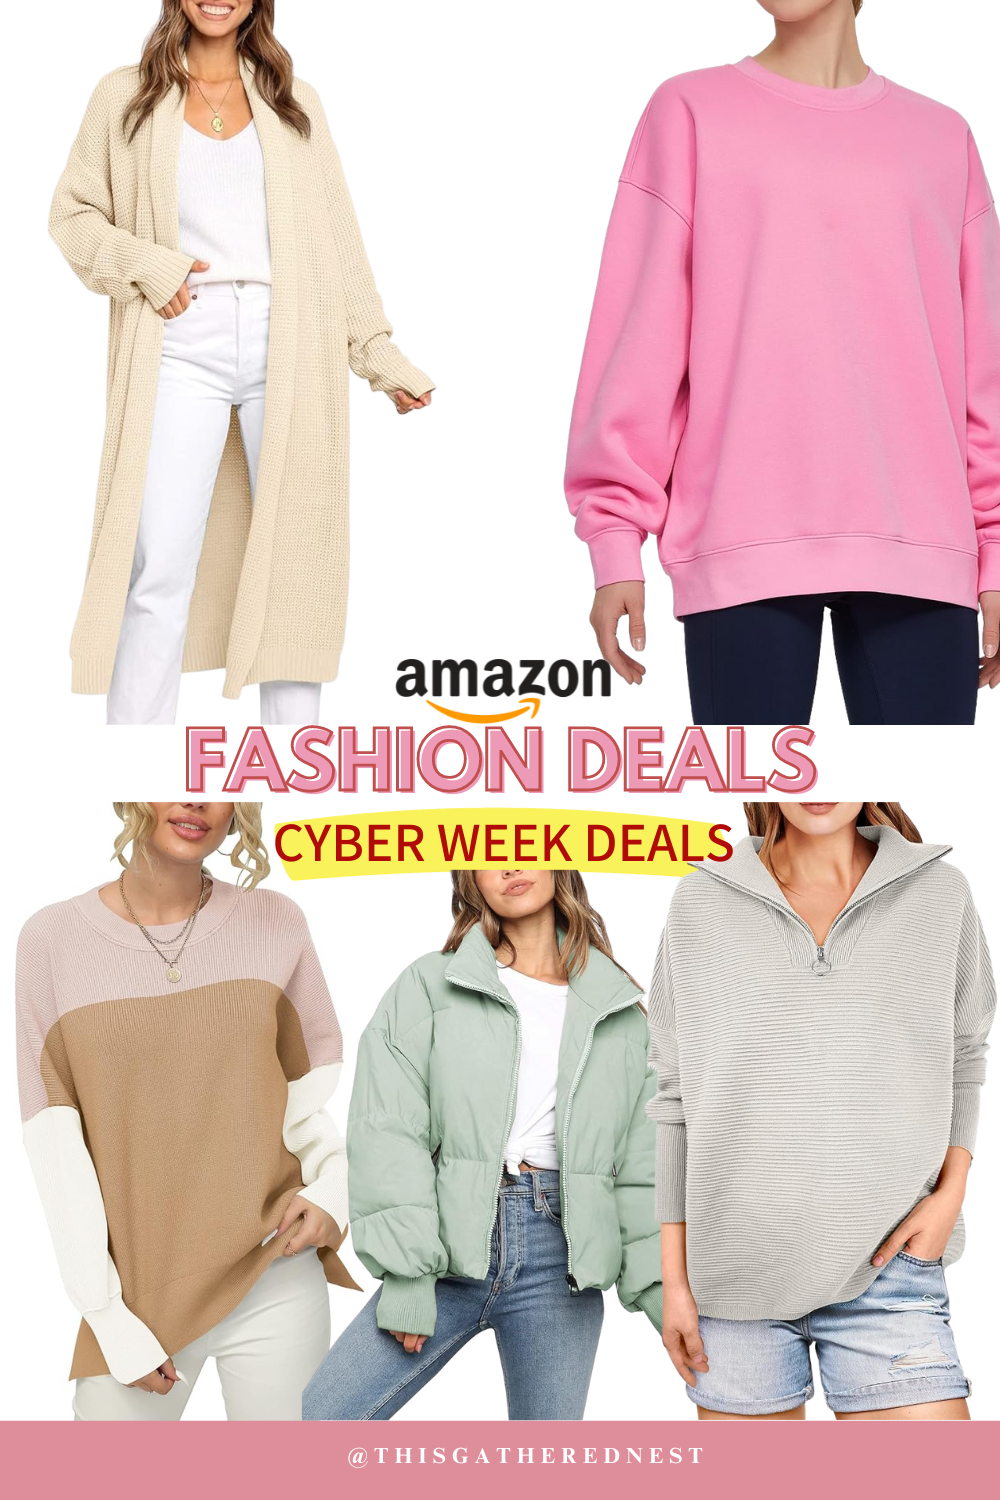 Amazon Fashion Deals